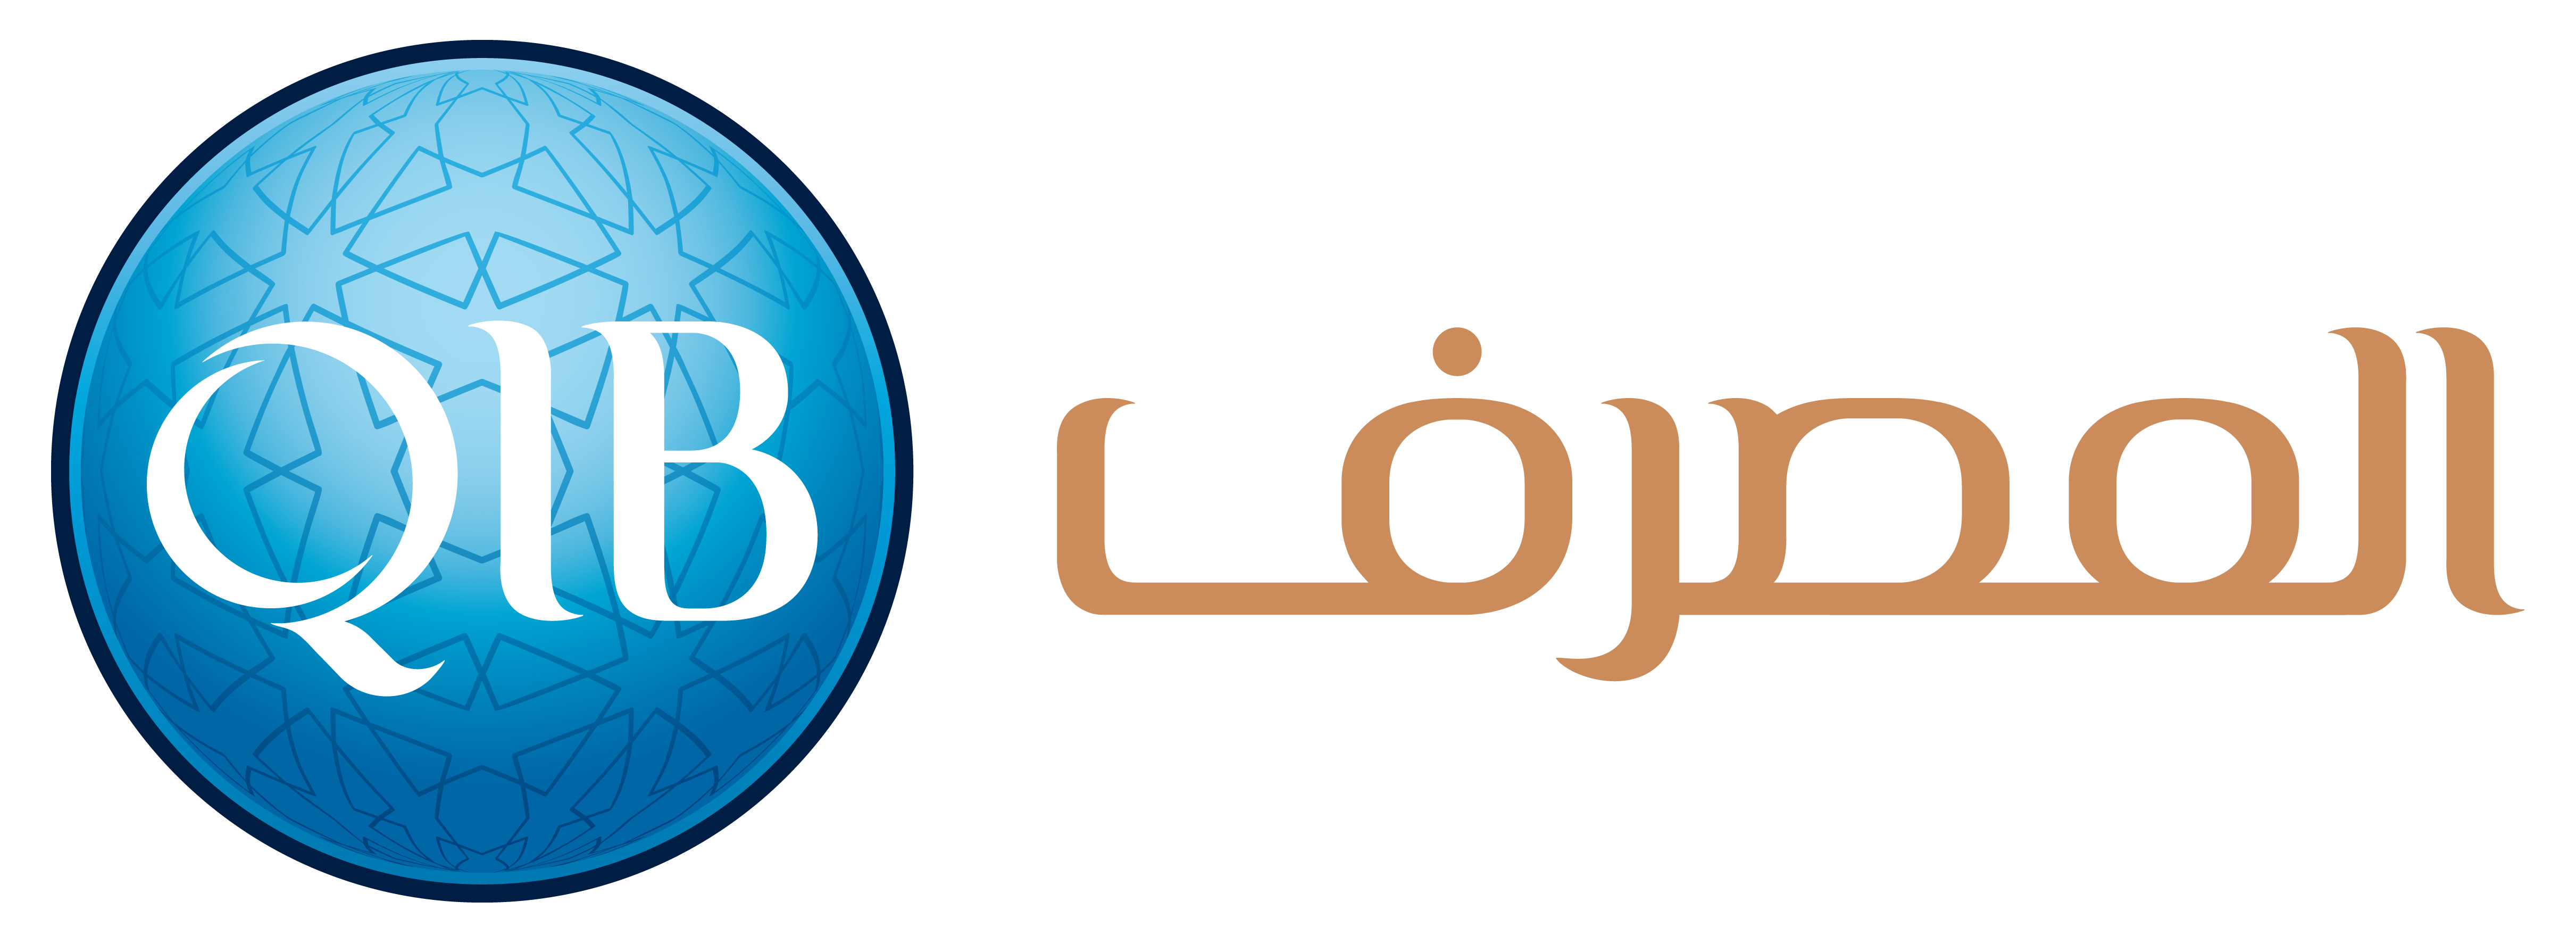 Qatar Islamic Bank Brand Logo